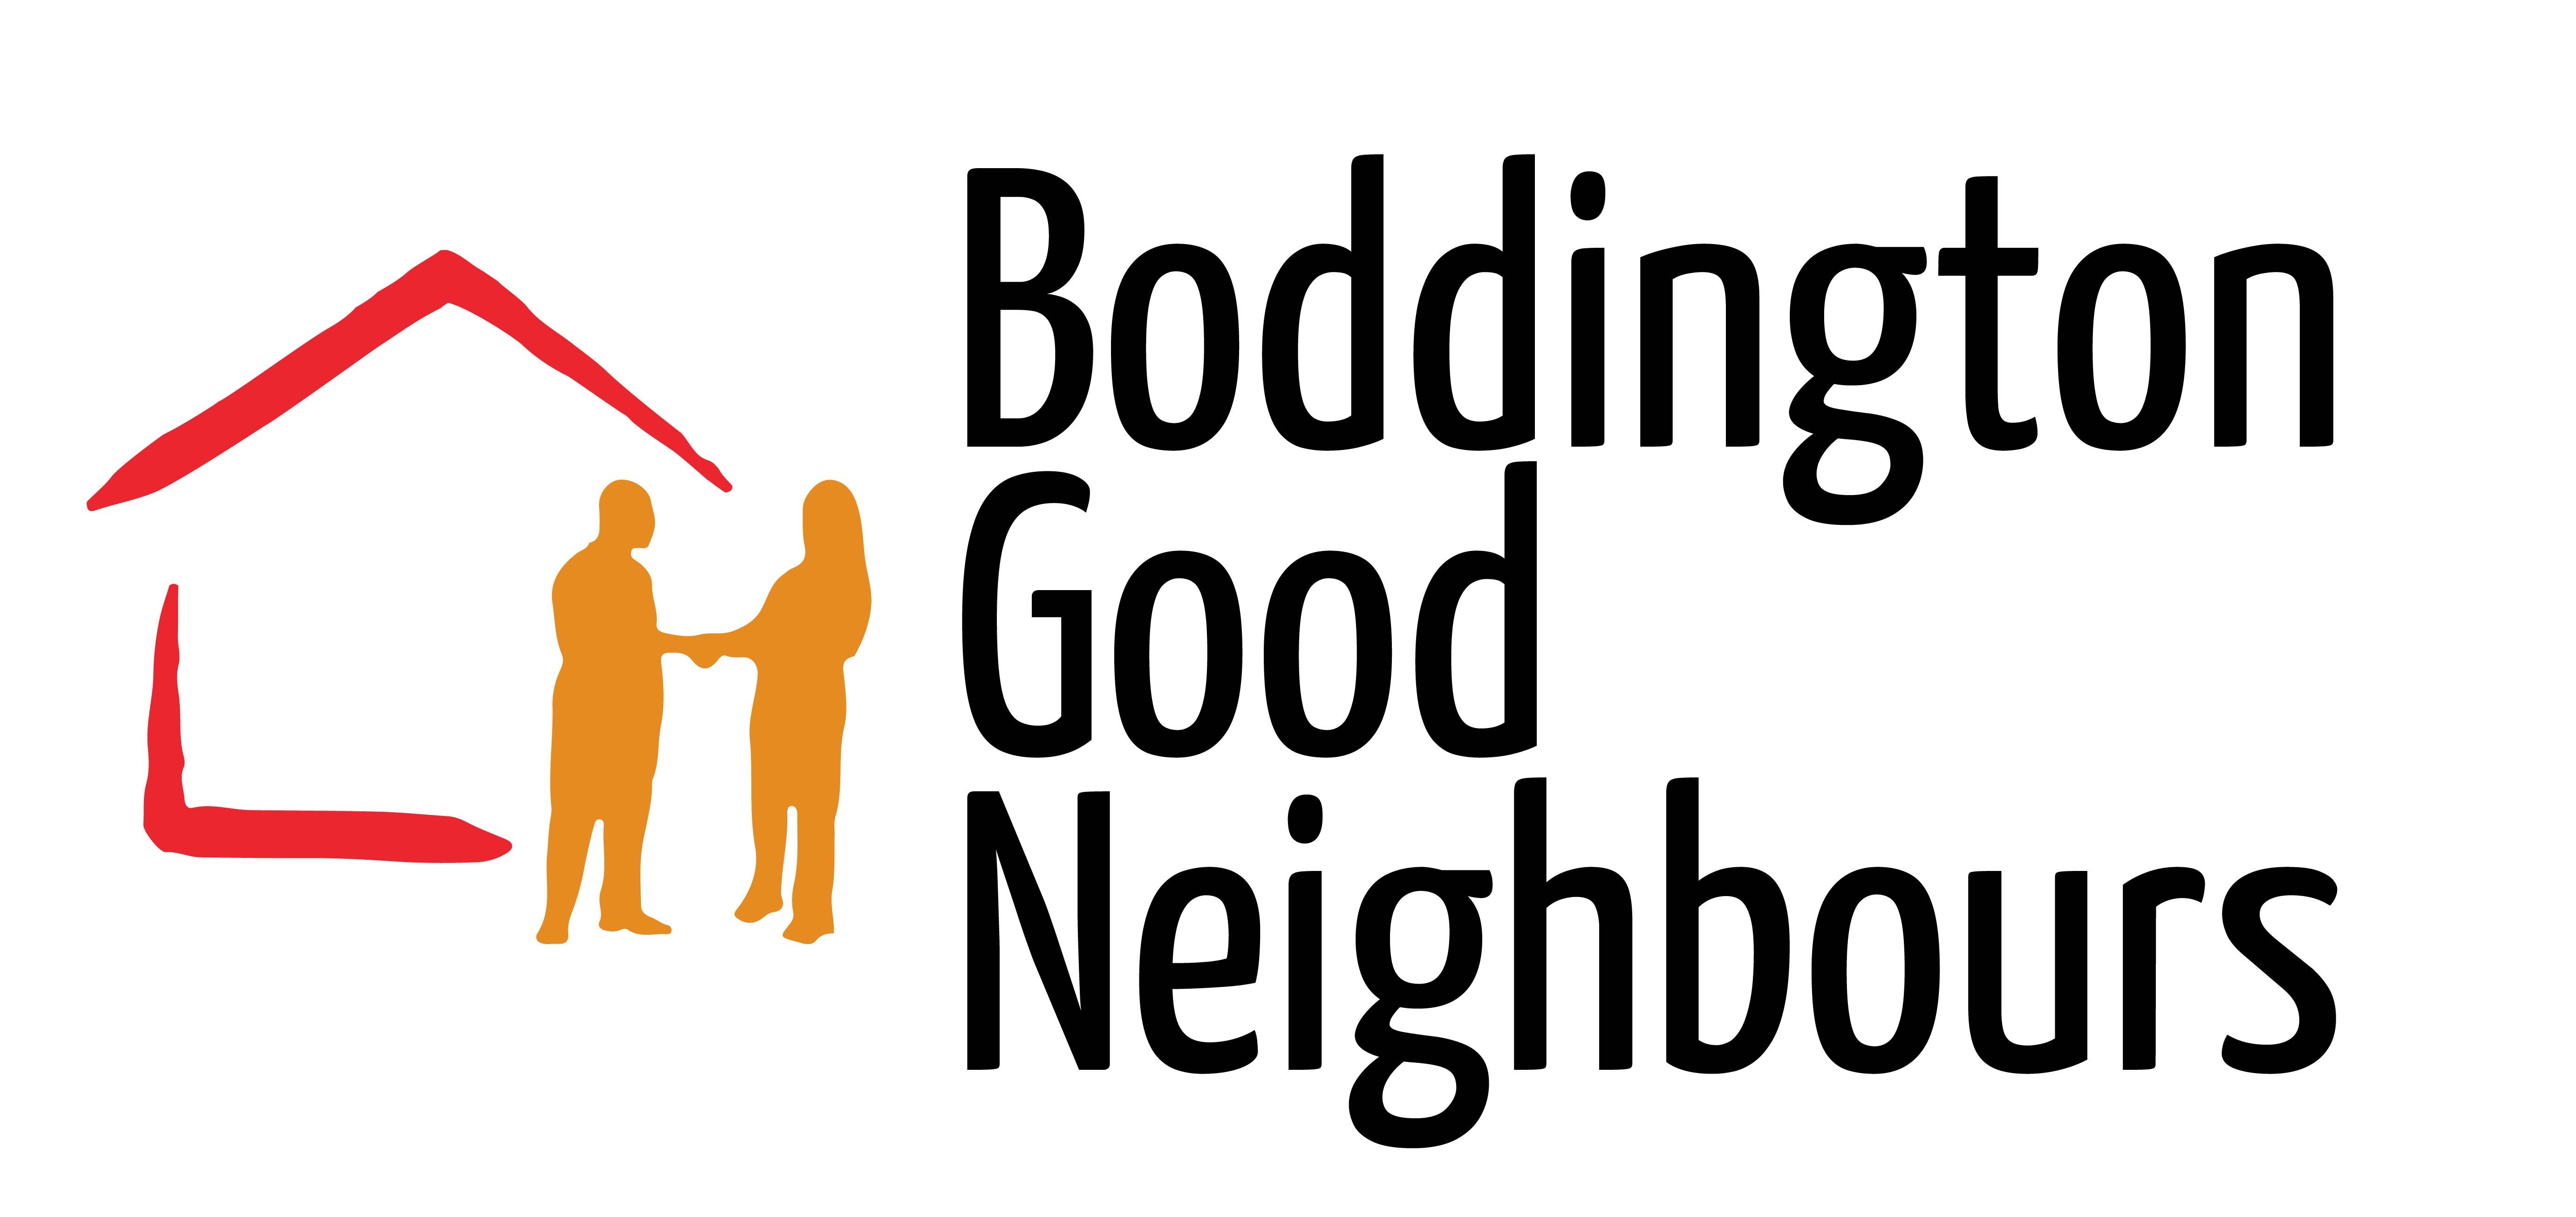 Boddington Good Neighbours Website